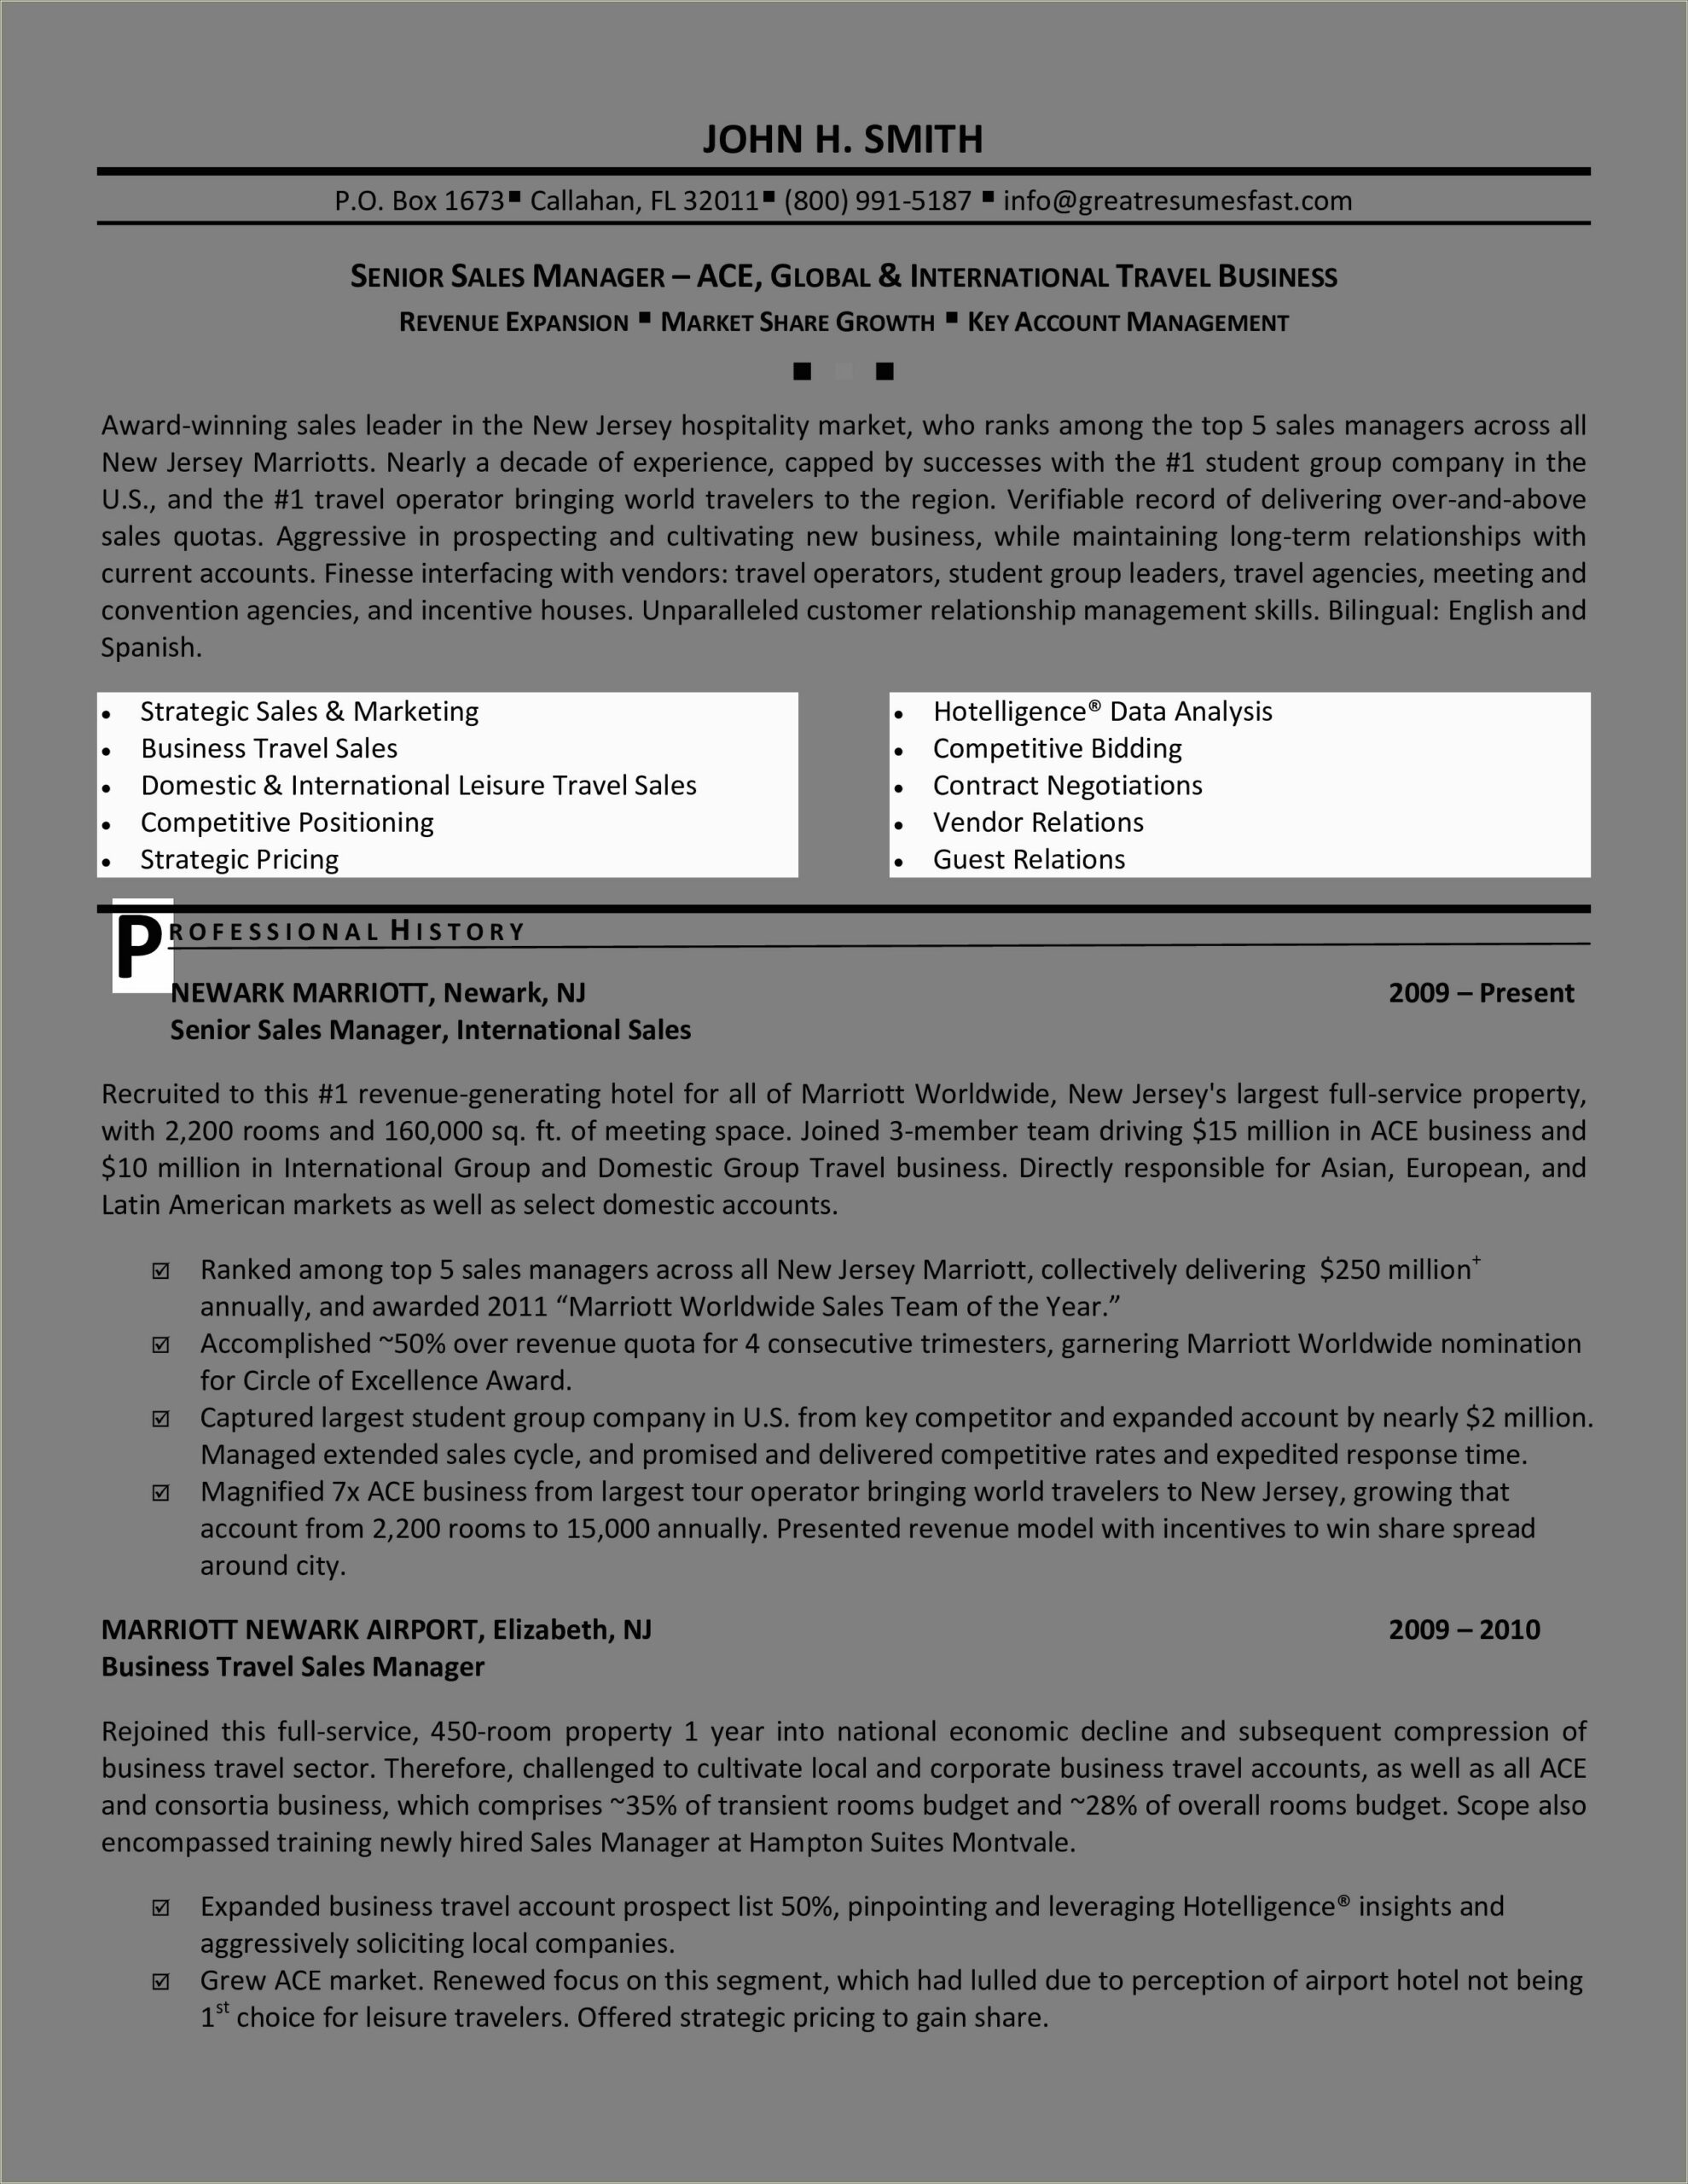 Resume Format For Pharma Marketing Manager